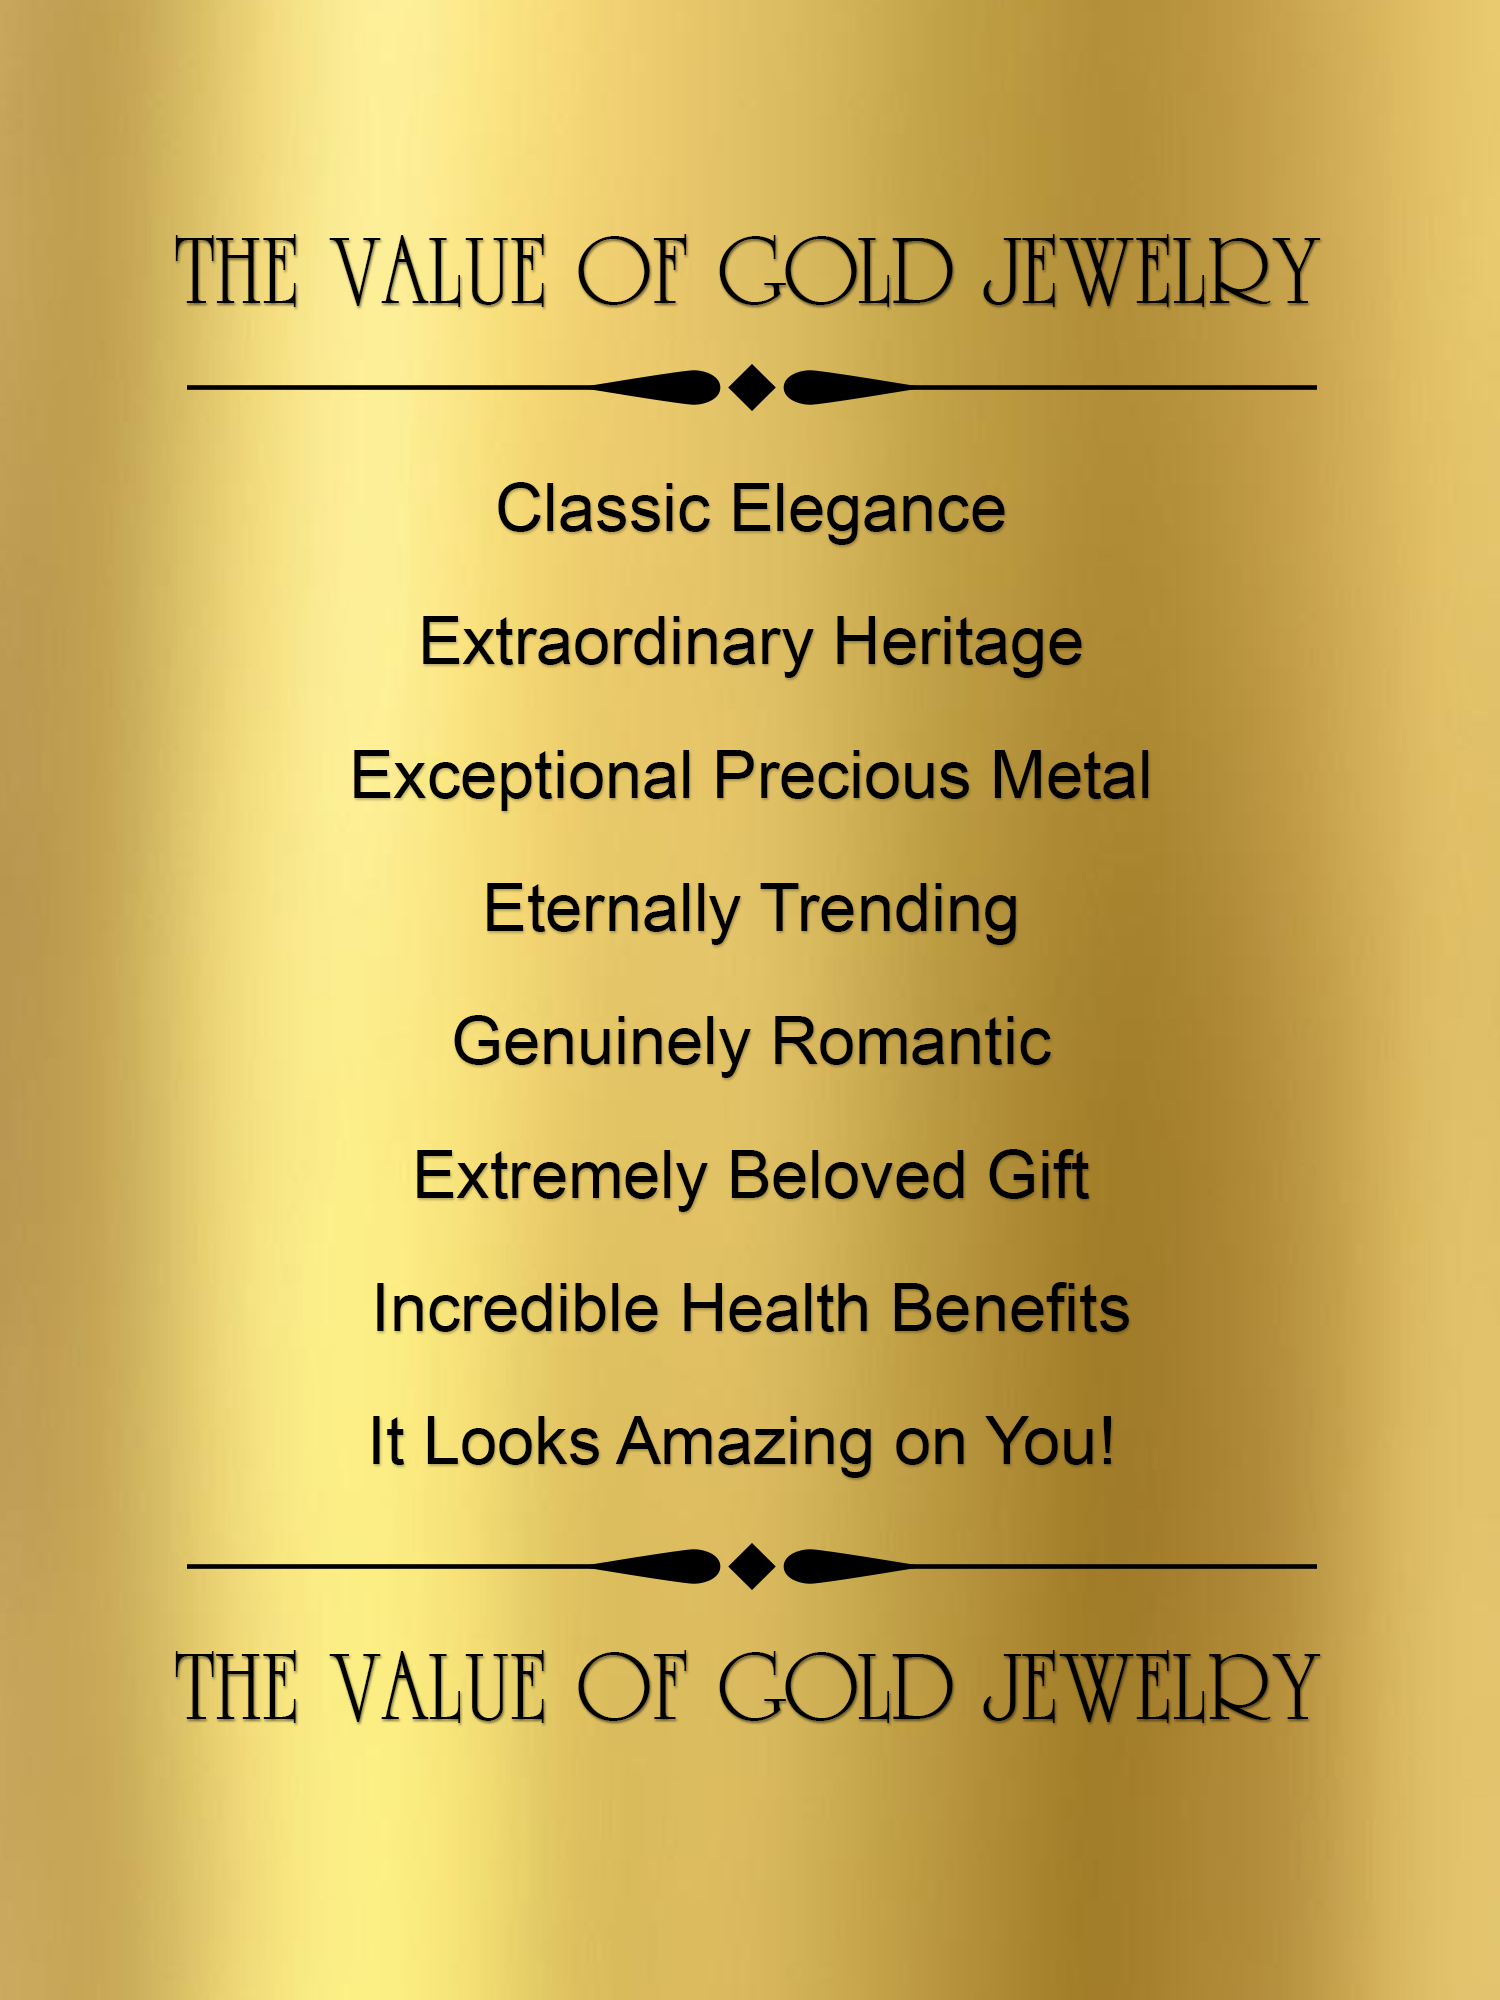 Forever New Diamond Cut 18kt Gold-Plated Bead Bracelet, 8" - image 3 of 4